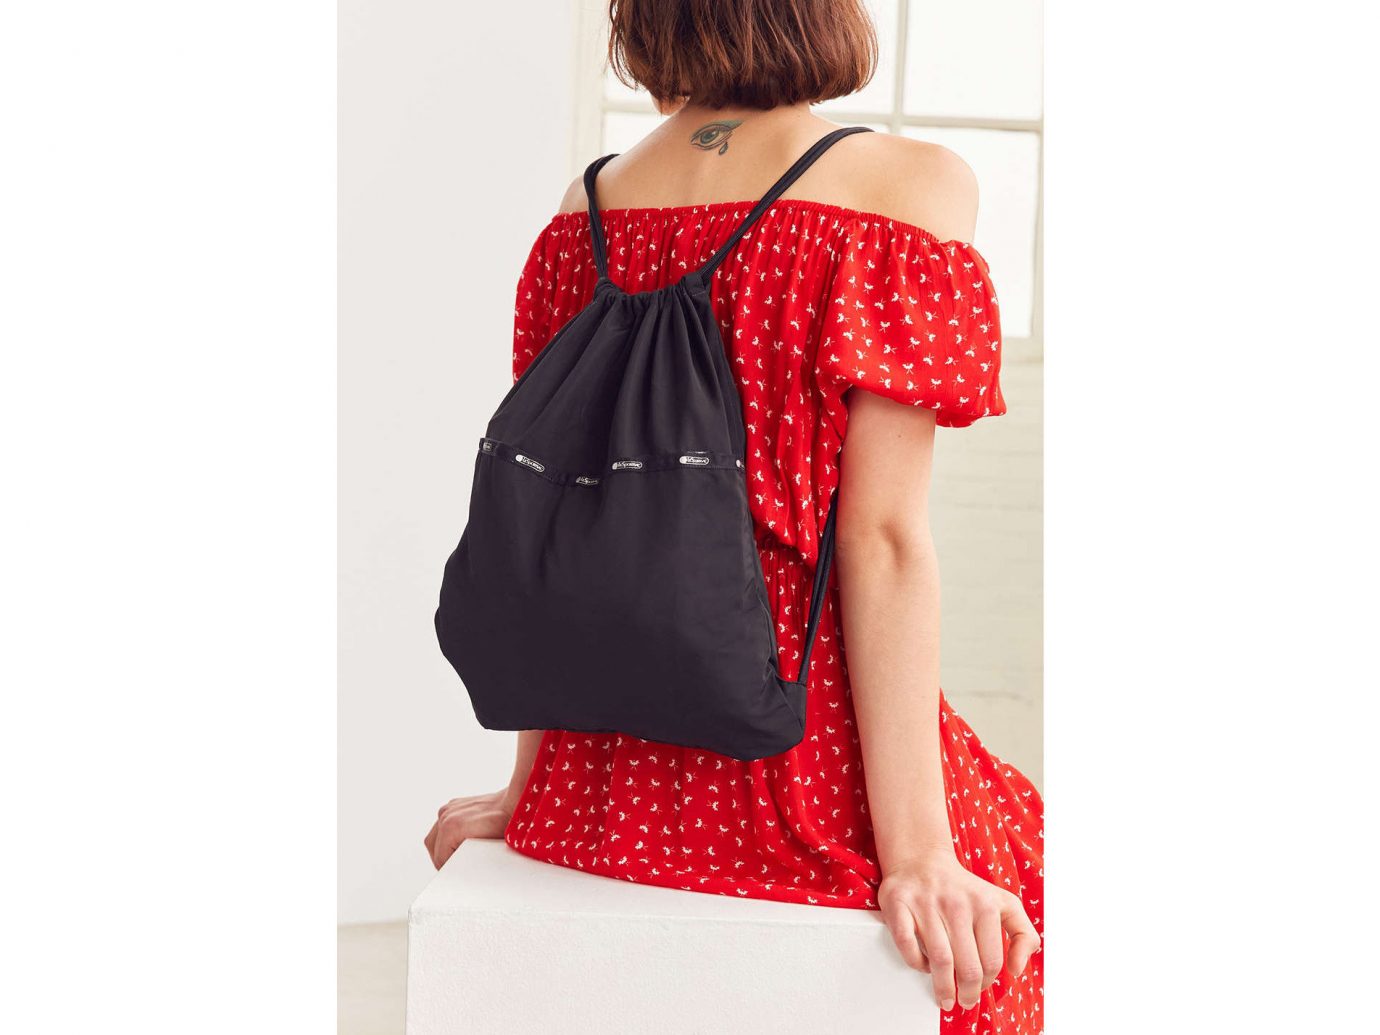 Style + Design red clothing indoor person shoulder polka dot bag Design joint pattern handbag product swimsuit top neck blouse sleeve tartan dressed